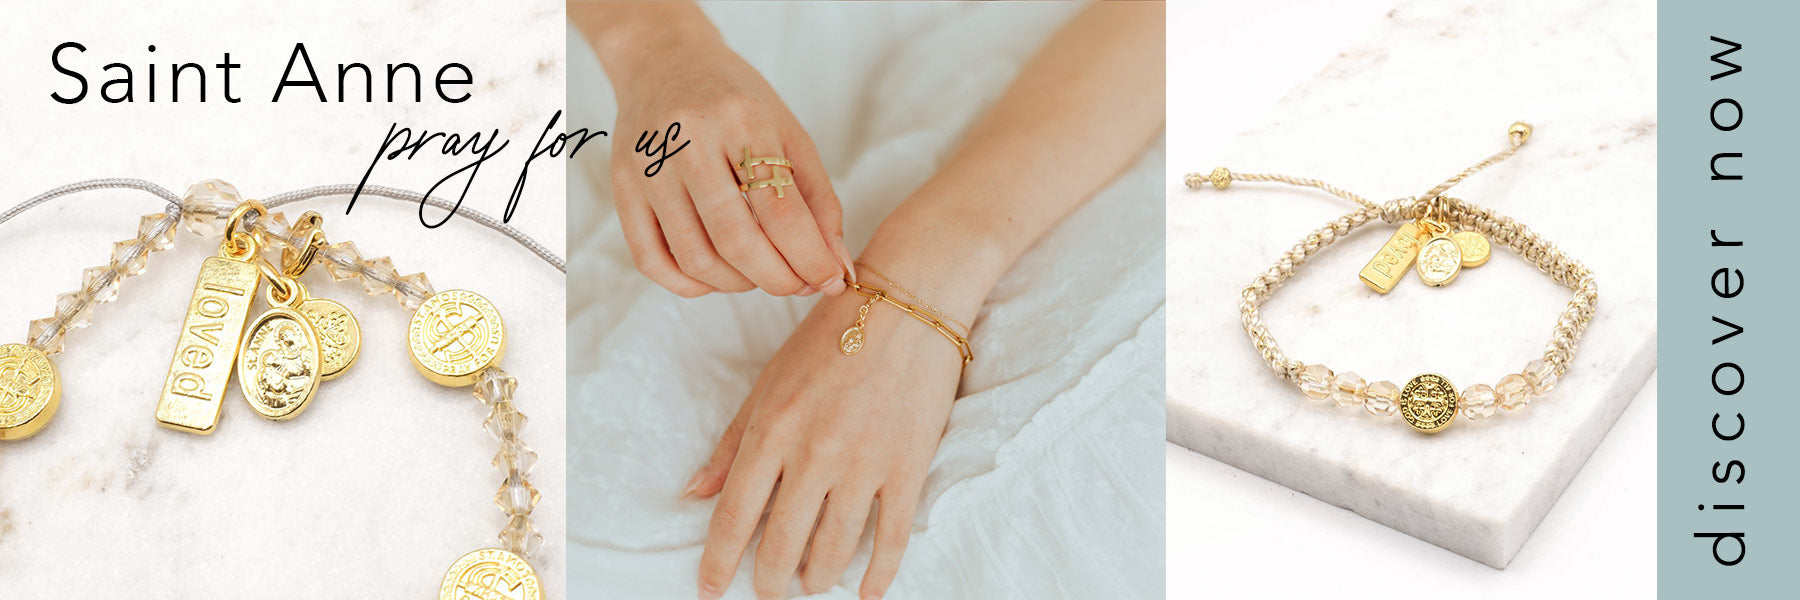 St. Anne charm in gold tone on bracelets